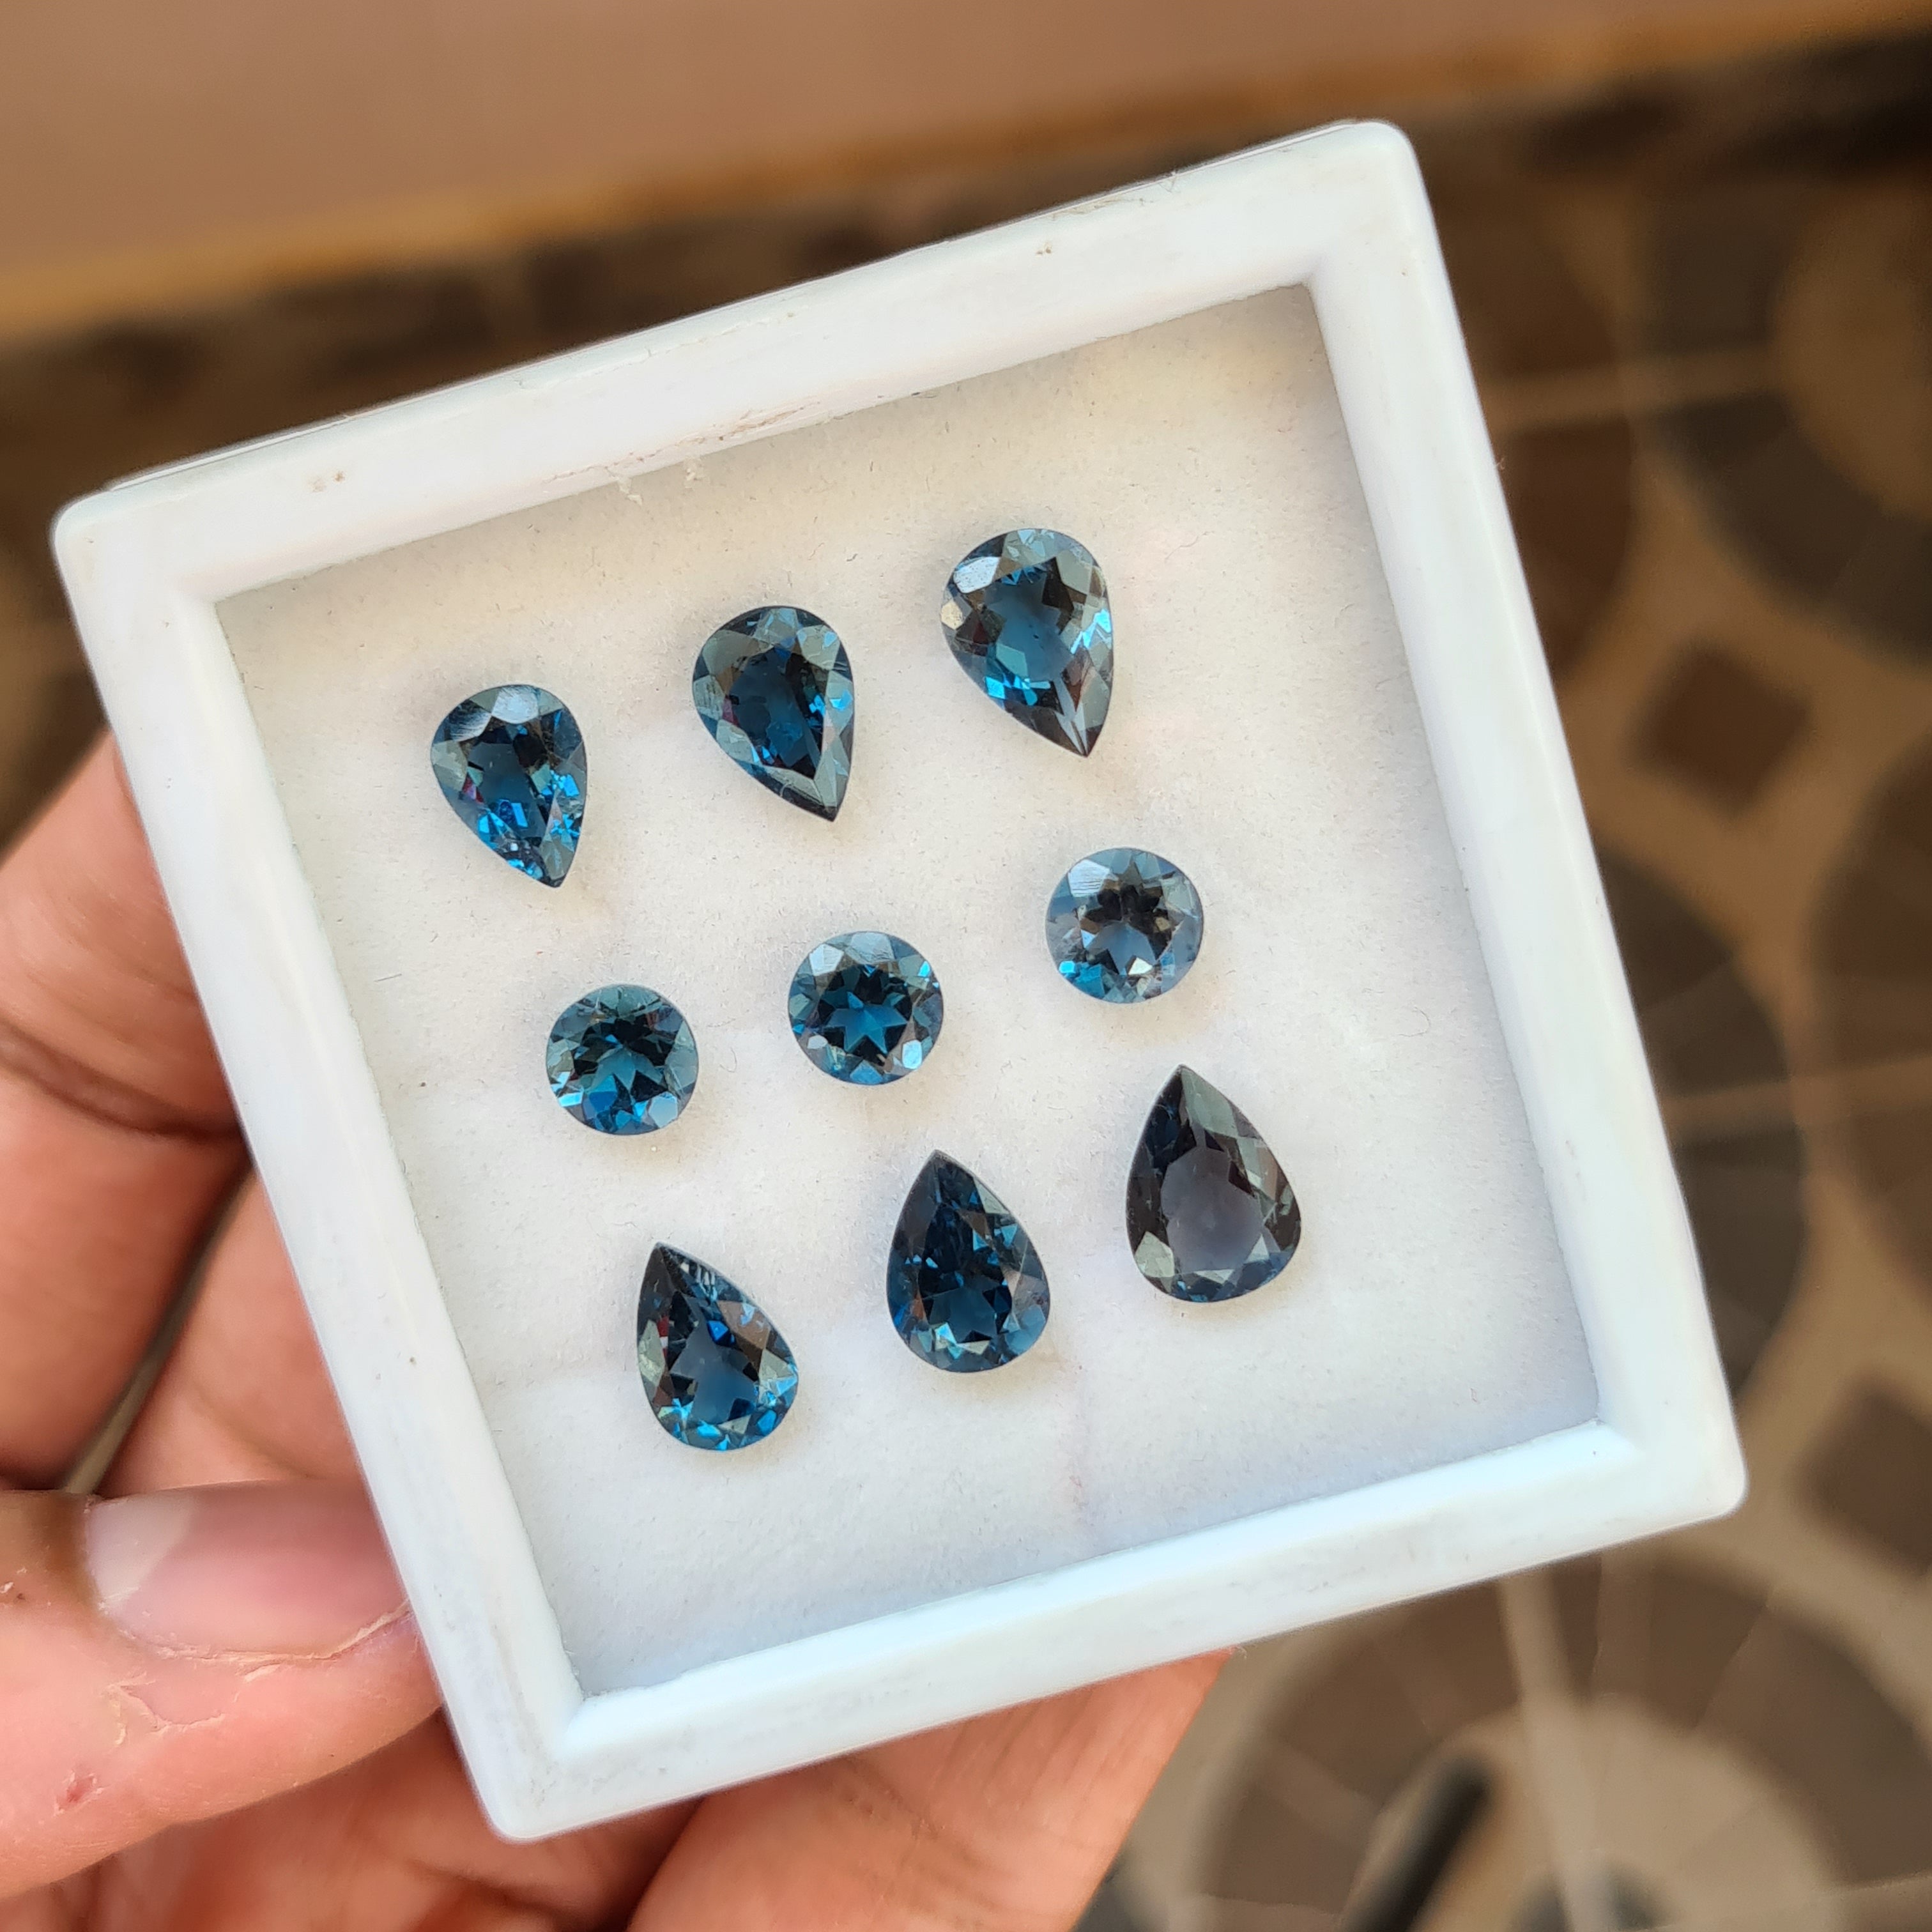 9 Pcs Natural London Blue Topaz Faceted Gemstone Mix Shape Size: 7-10mm - The LabradoriteKing